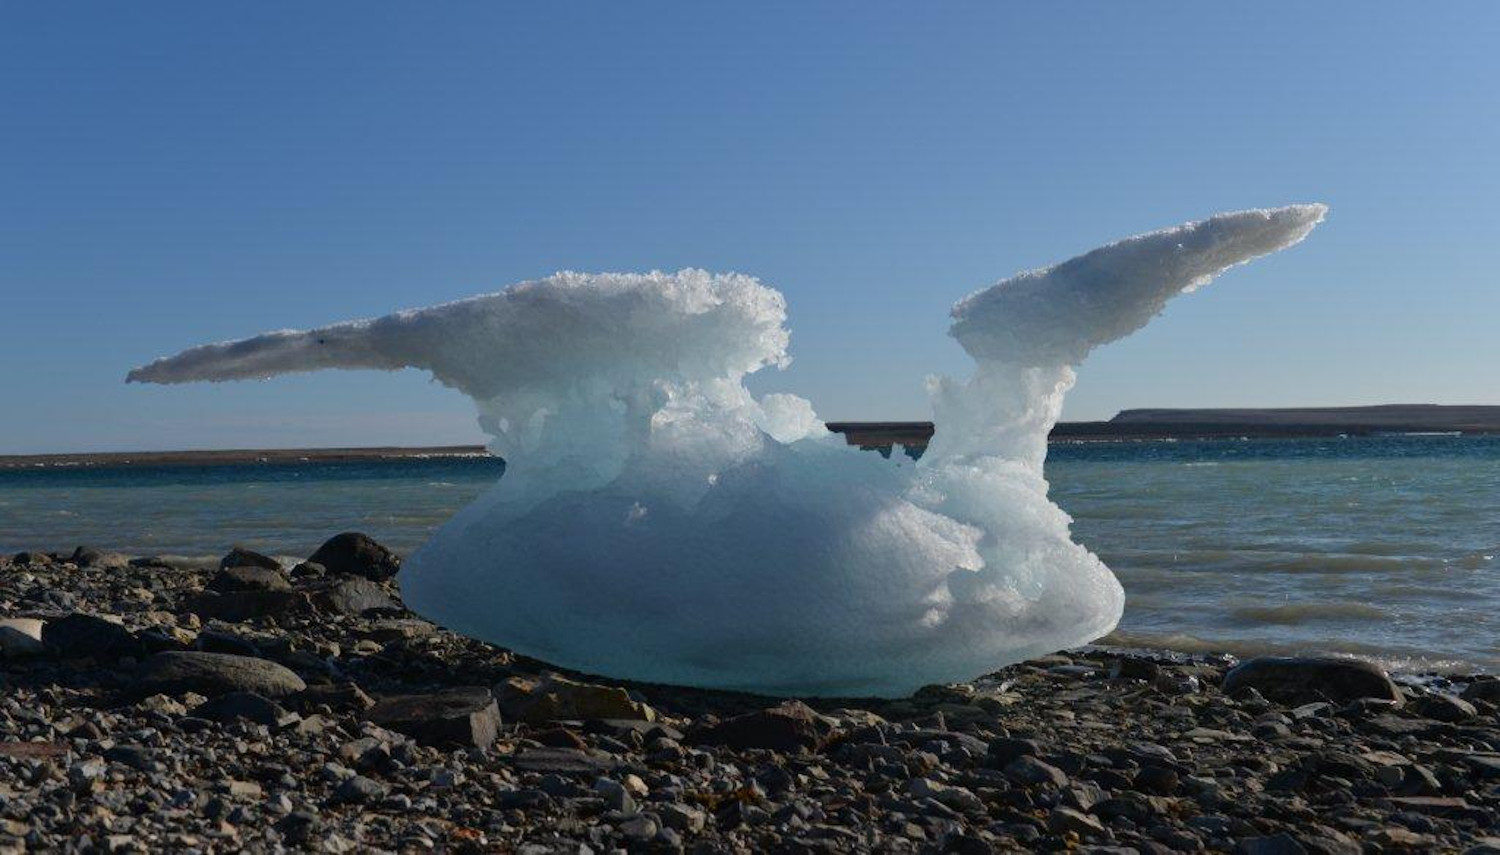 Vripack - Beothuk - Northwest Passage - Nature photo ice sculpture - Journey - Exploring the World